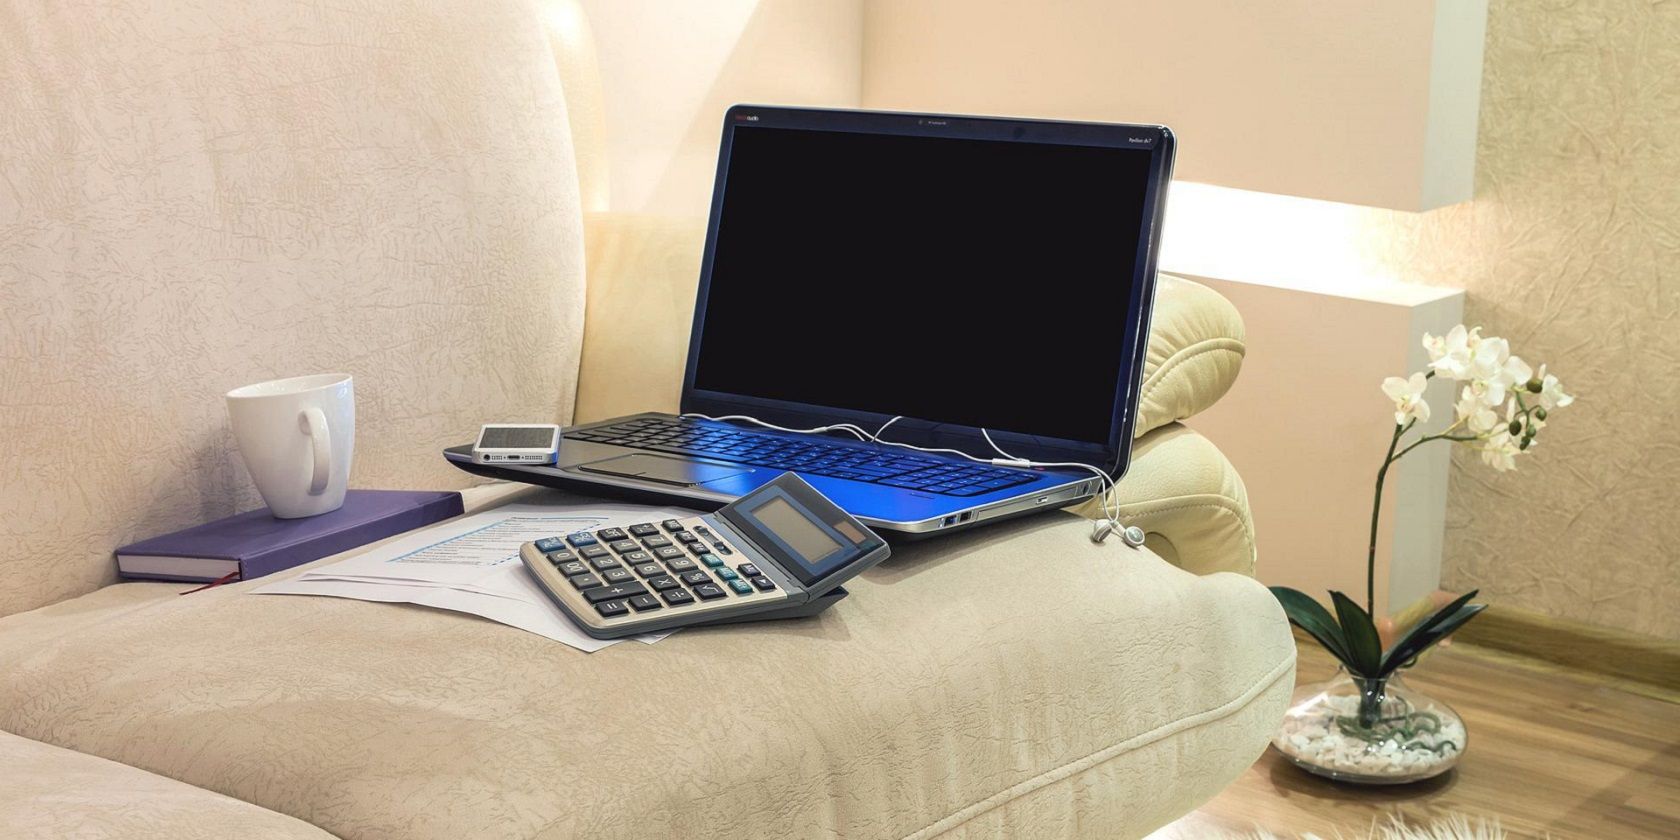 laptop on sofa with phone, calculator, notebook, and coffee mug